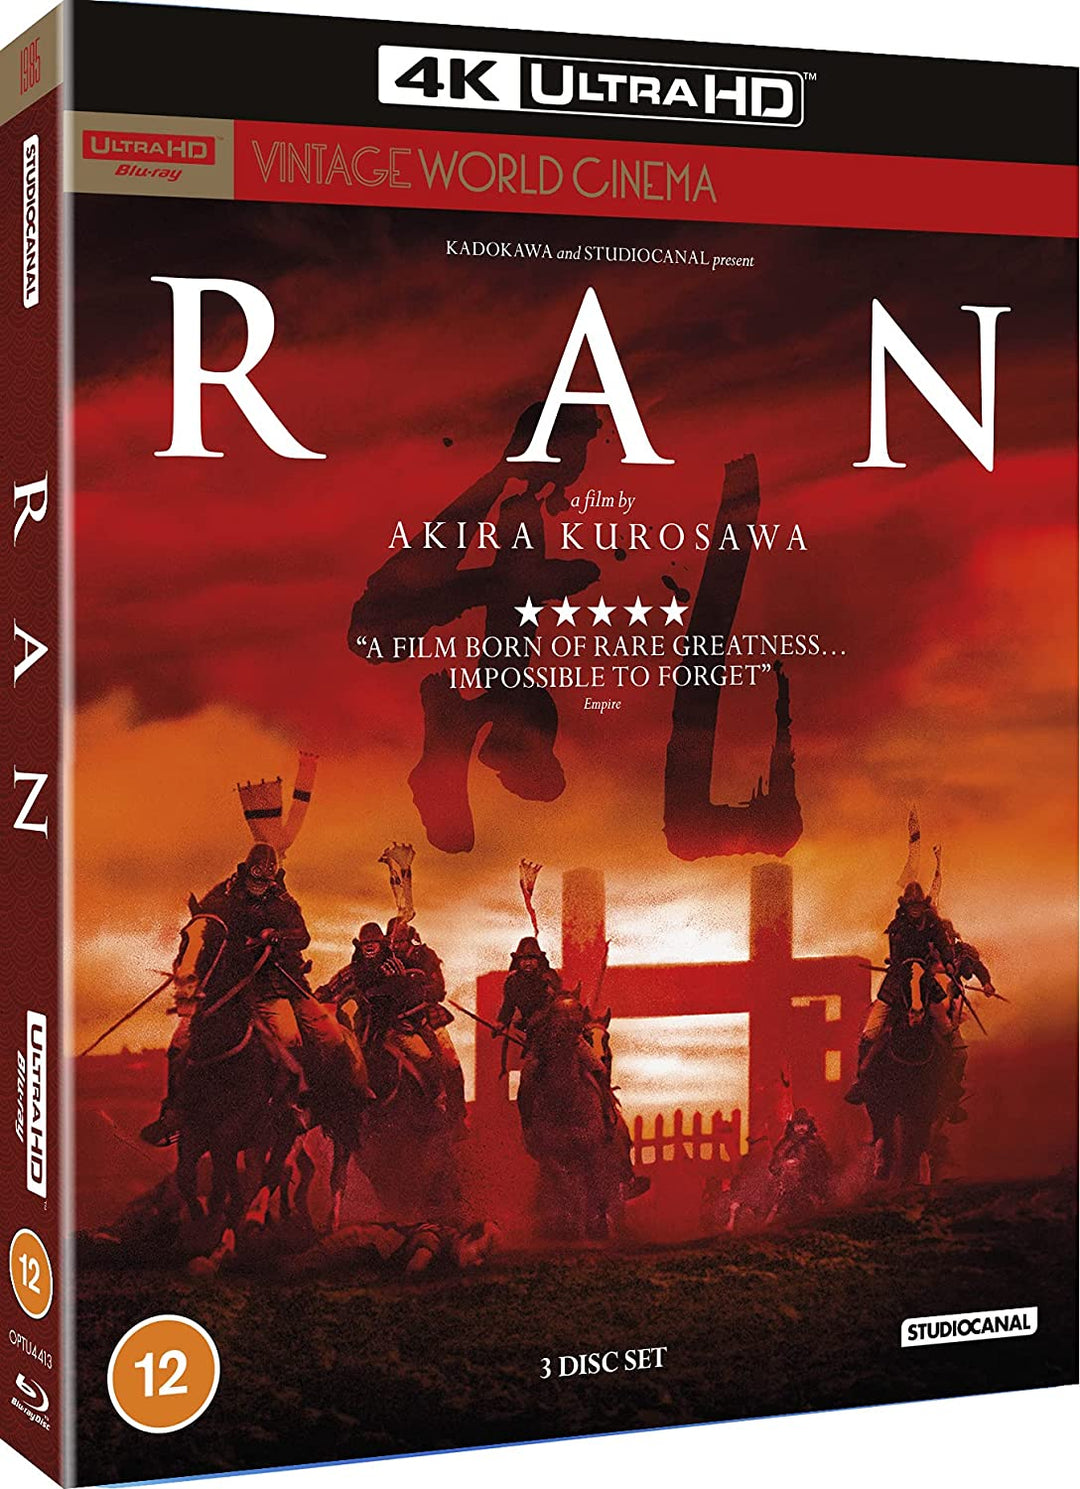 RAN (Vintage World Cinema) [Blu-ray]